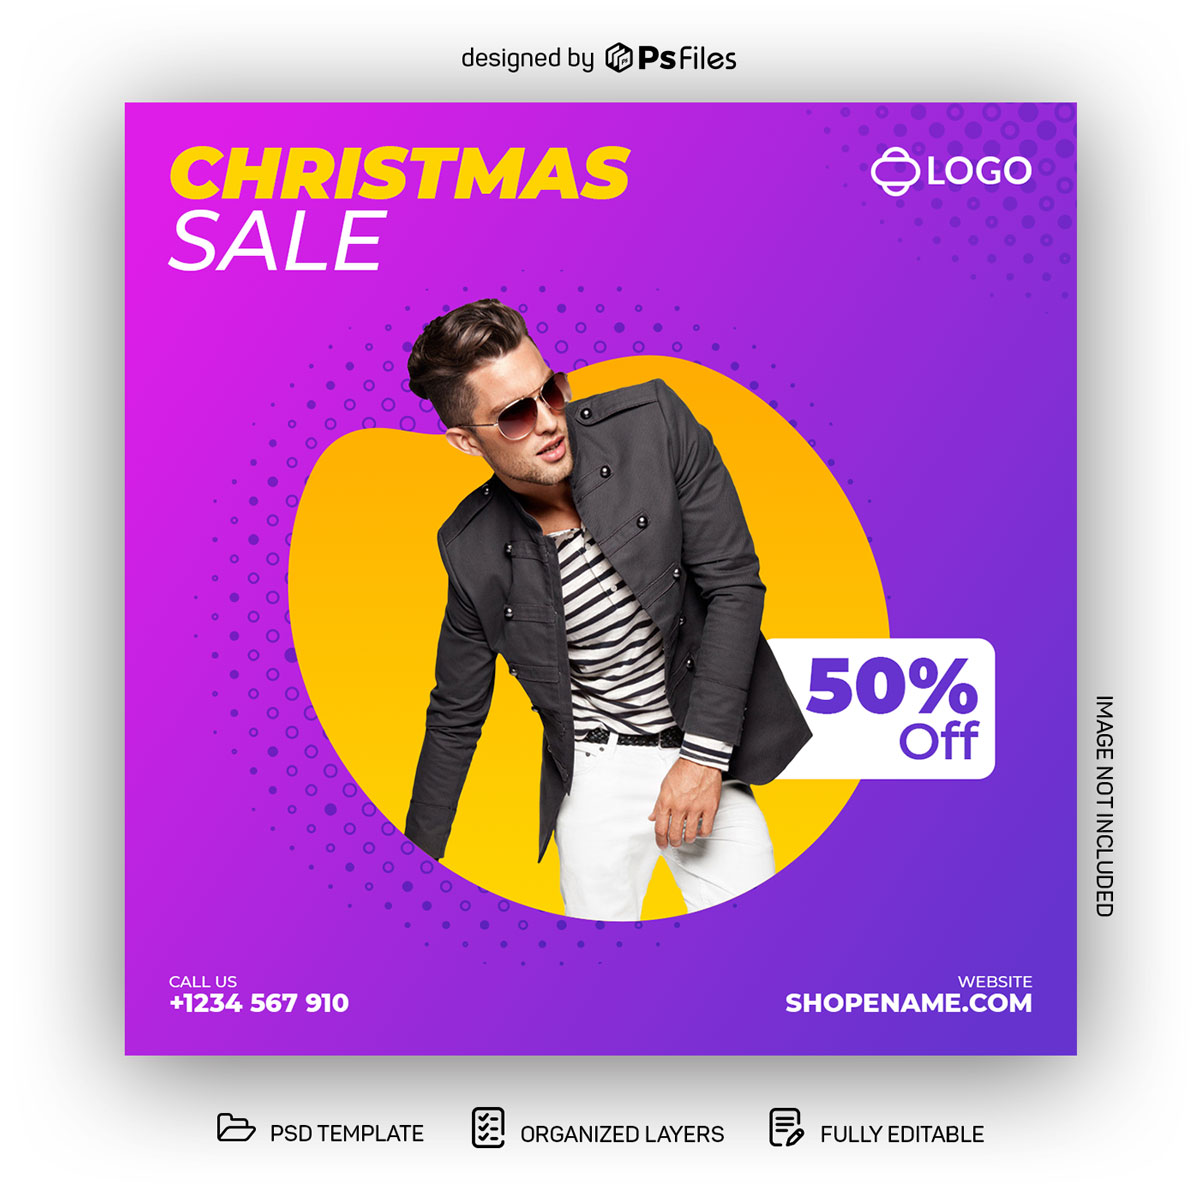 Christmas Sale Social Media Post Design Template PSD Free Download